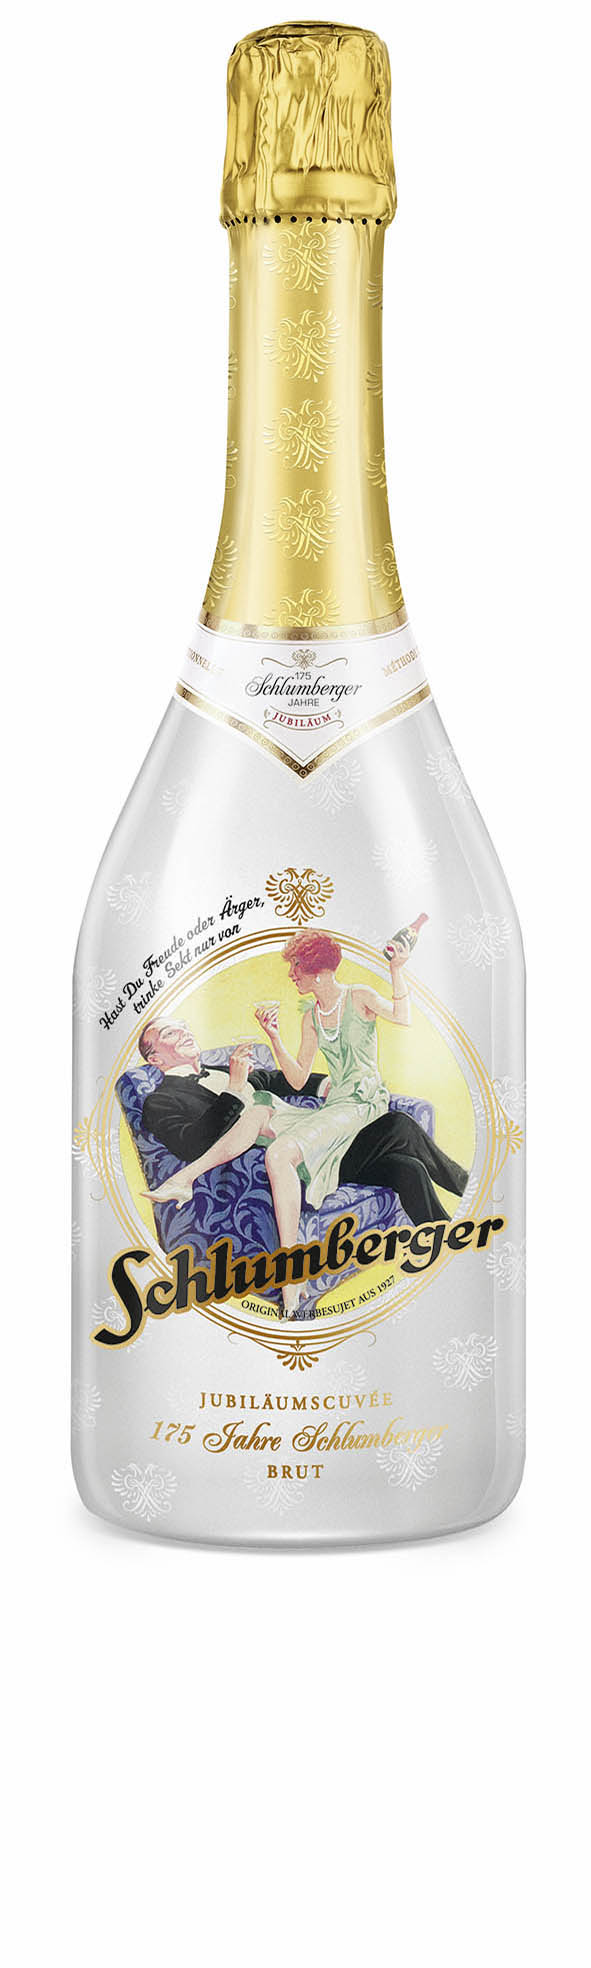 Schlumberger 175 Jahre Jubiläumscuvée